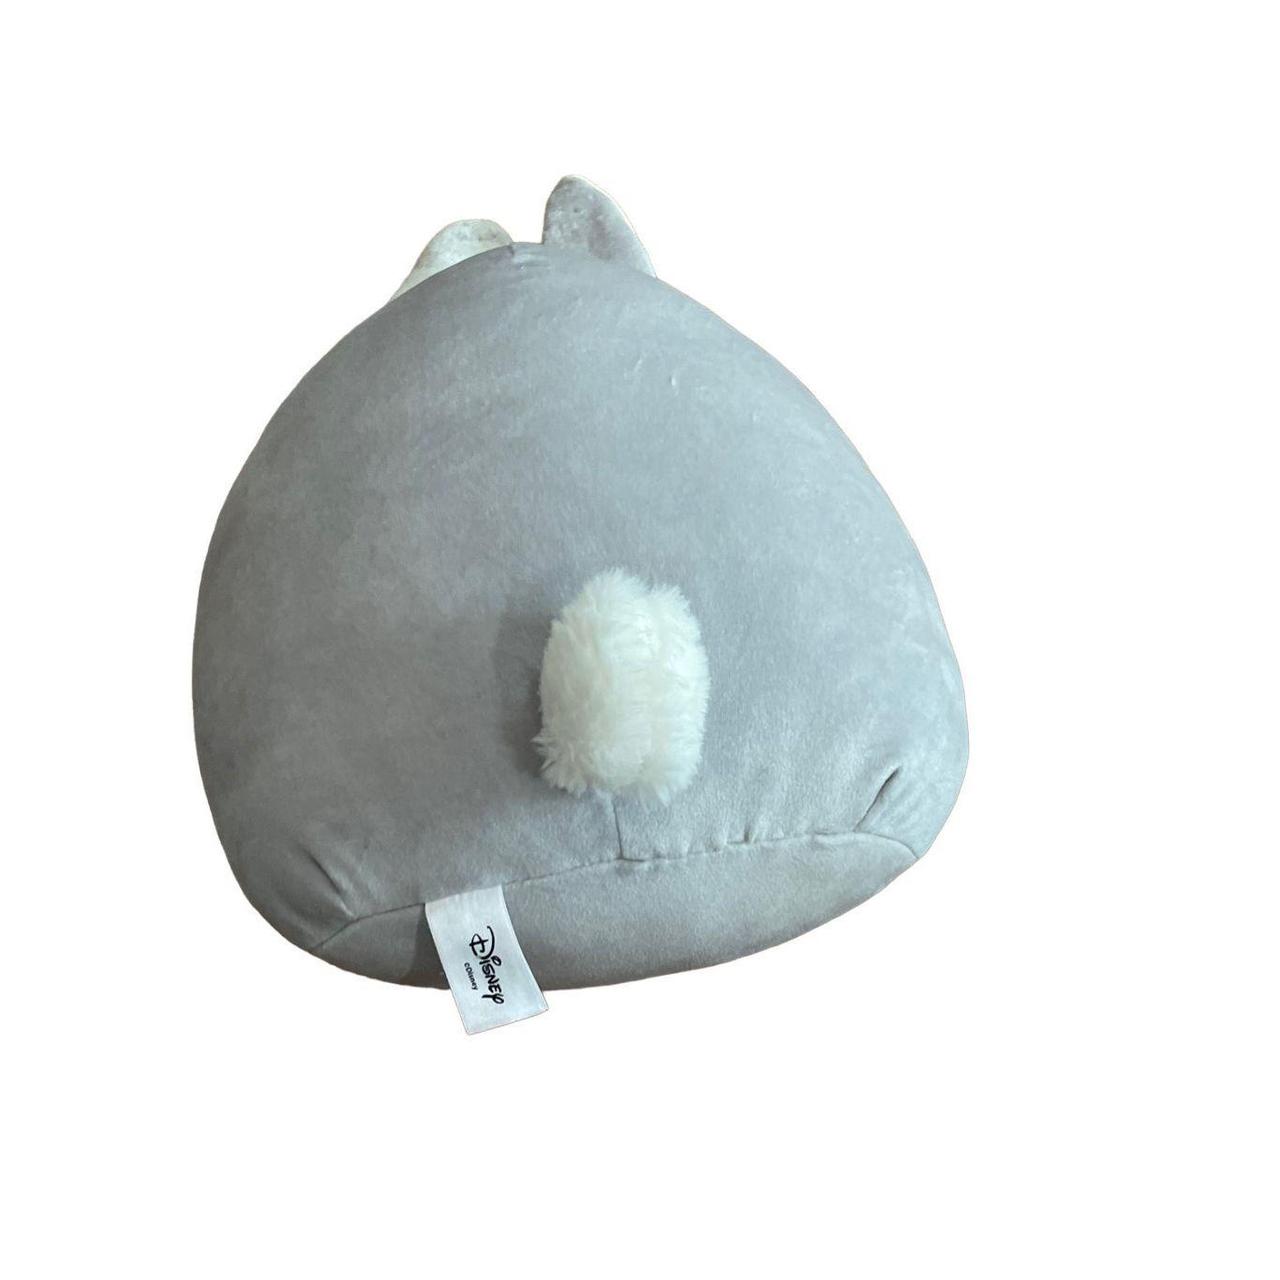 Mashimaro plush. Super cute kawaii rabbit plush - Depop